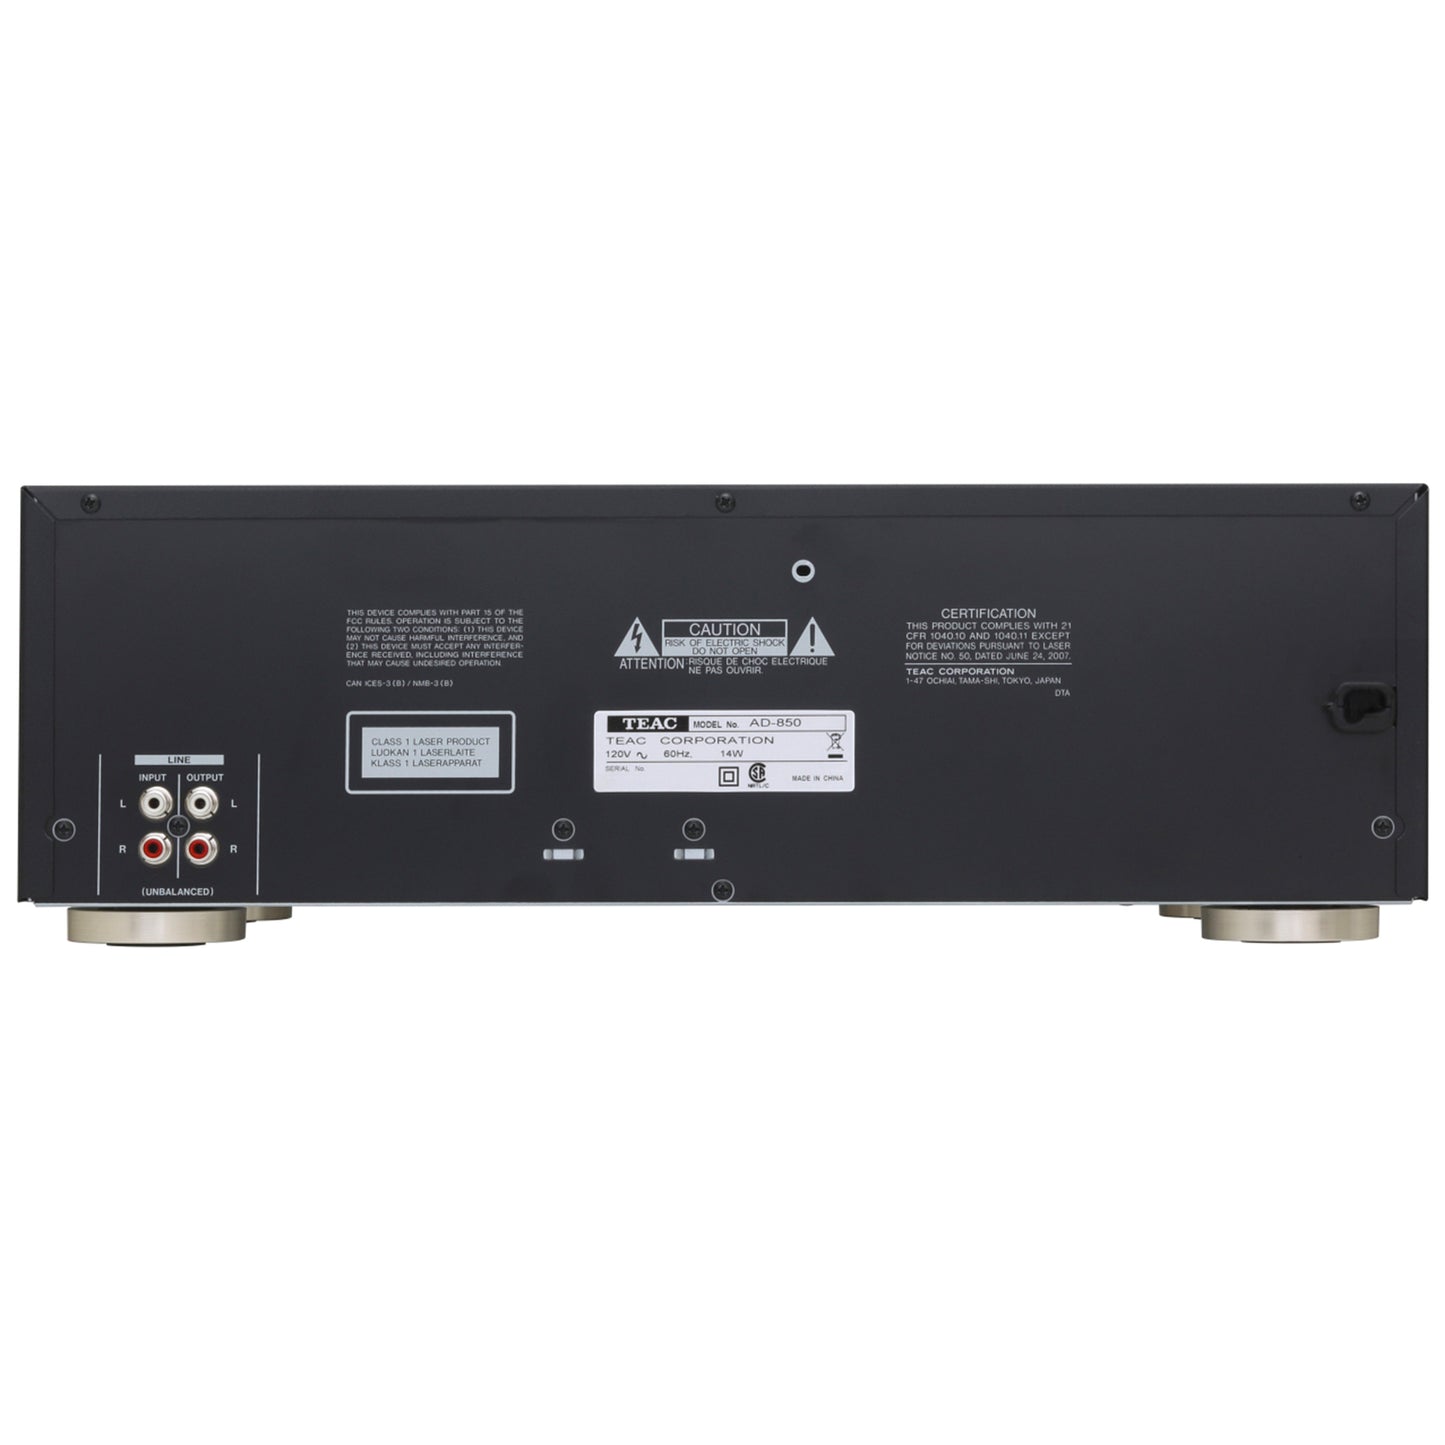 AD-850-SE Cassette Deck CD Player